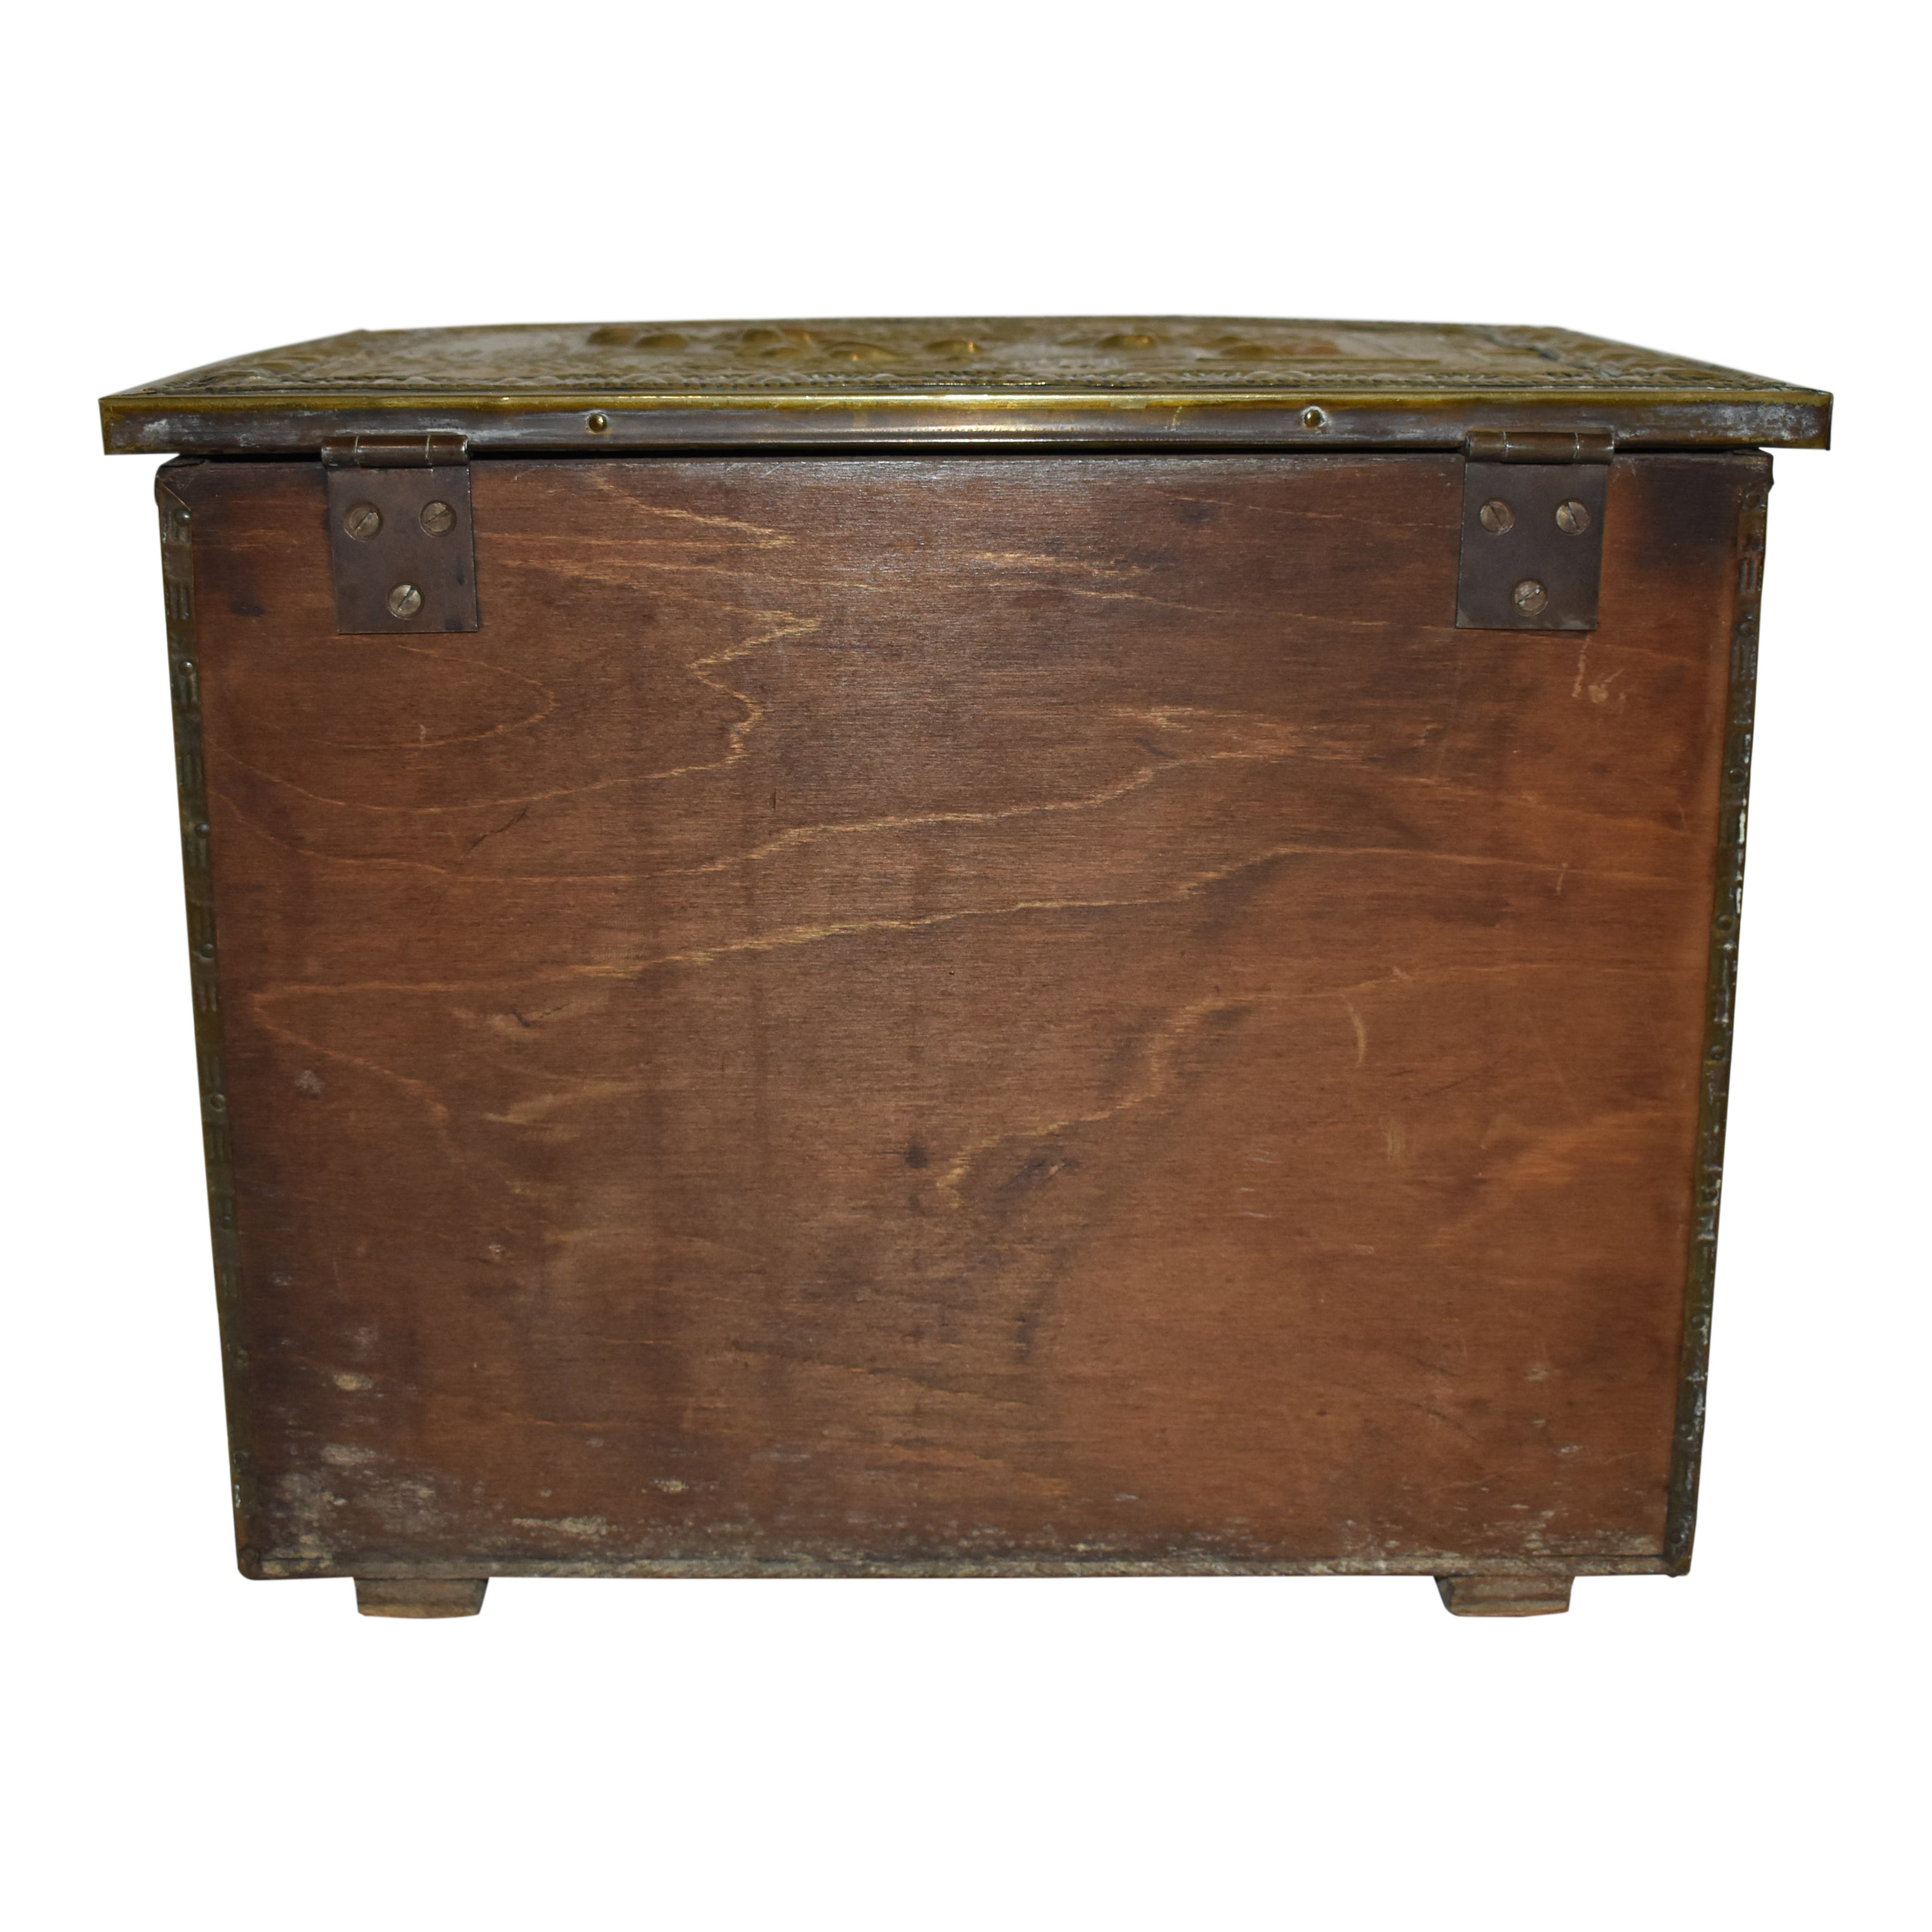 Ornate Decorative Box